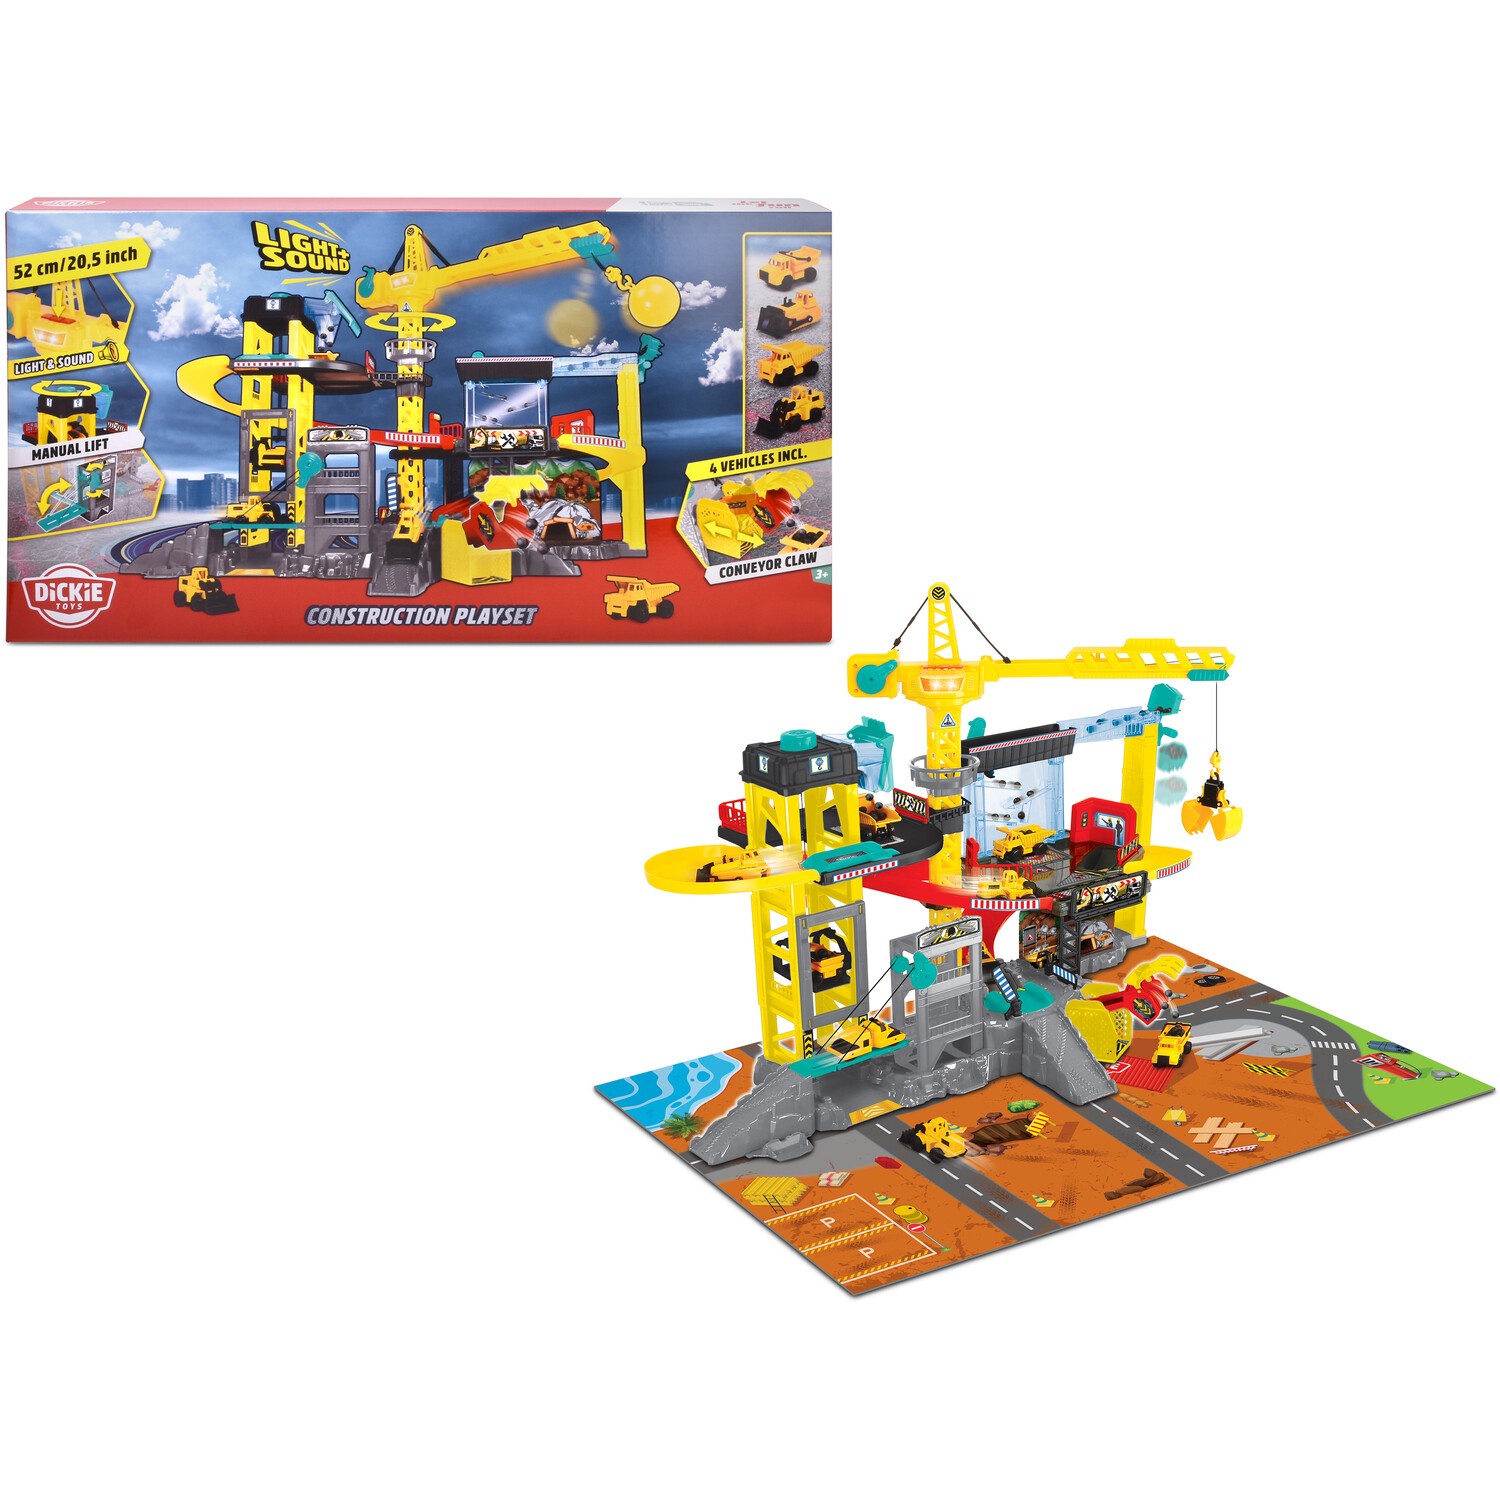 Construction Playset - Yellow Image